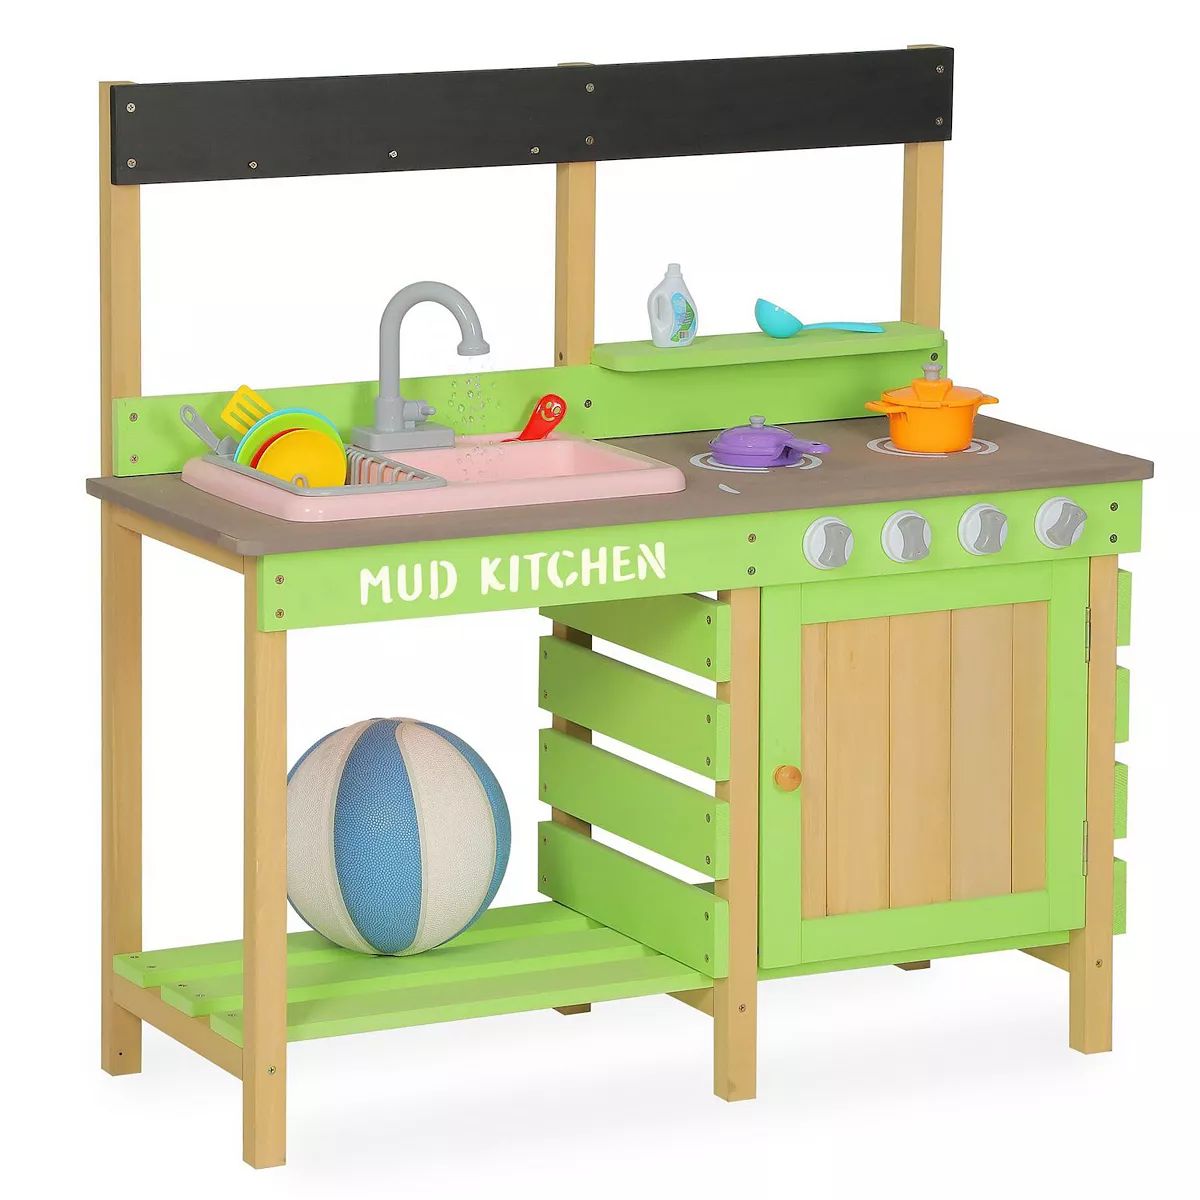 F.c Design Wooden Kids Kitchen Playset - Indoor/outdoor Pretend Mud Kitchen Toy For Toddlers | Kohl's